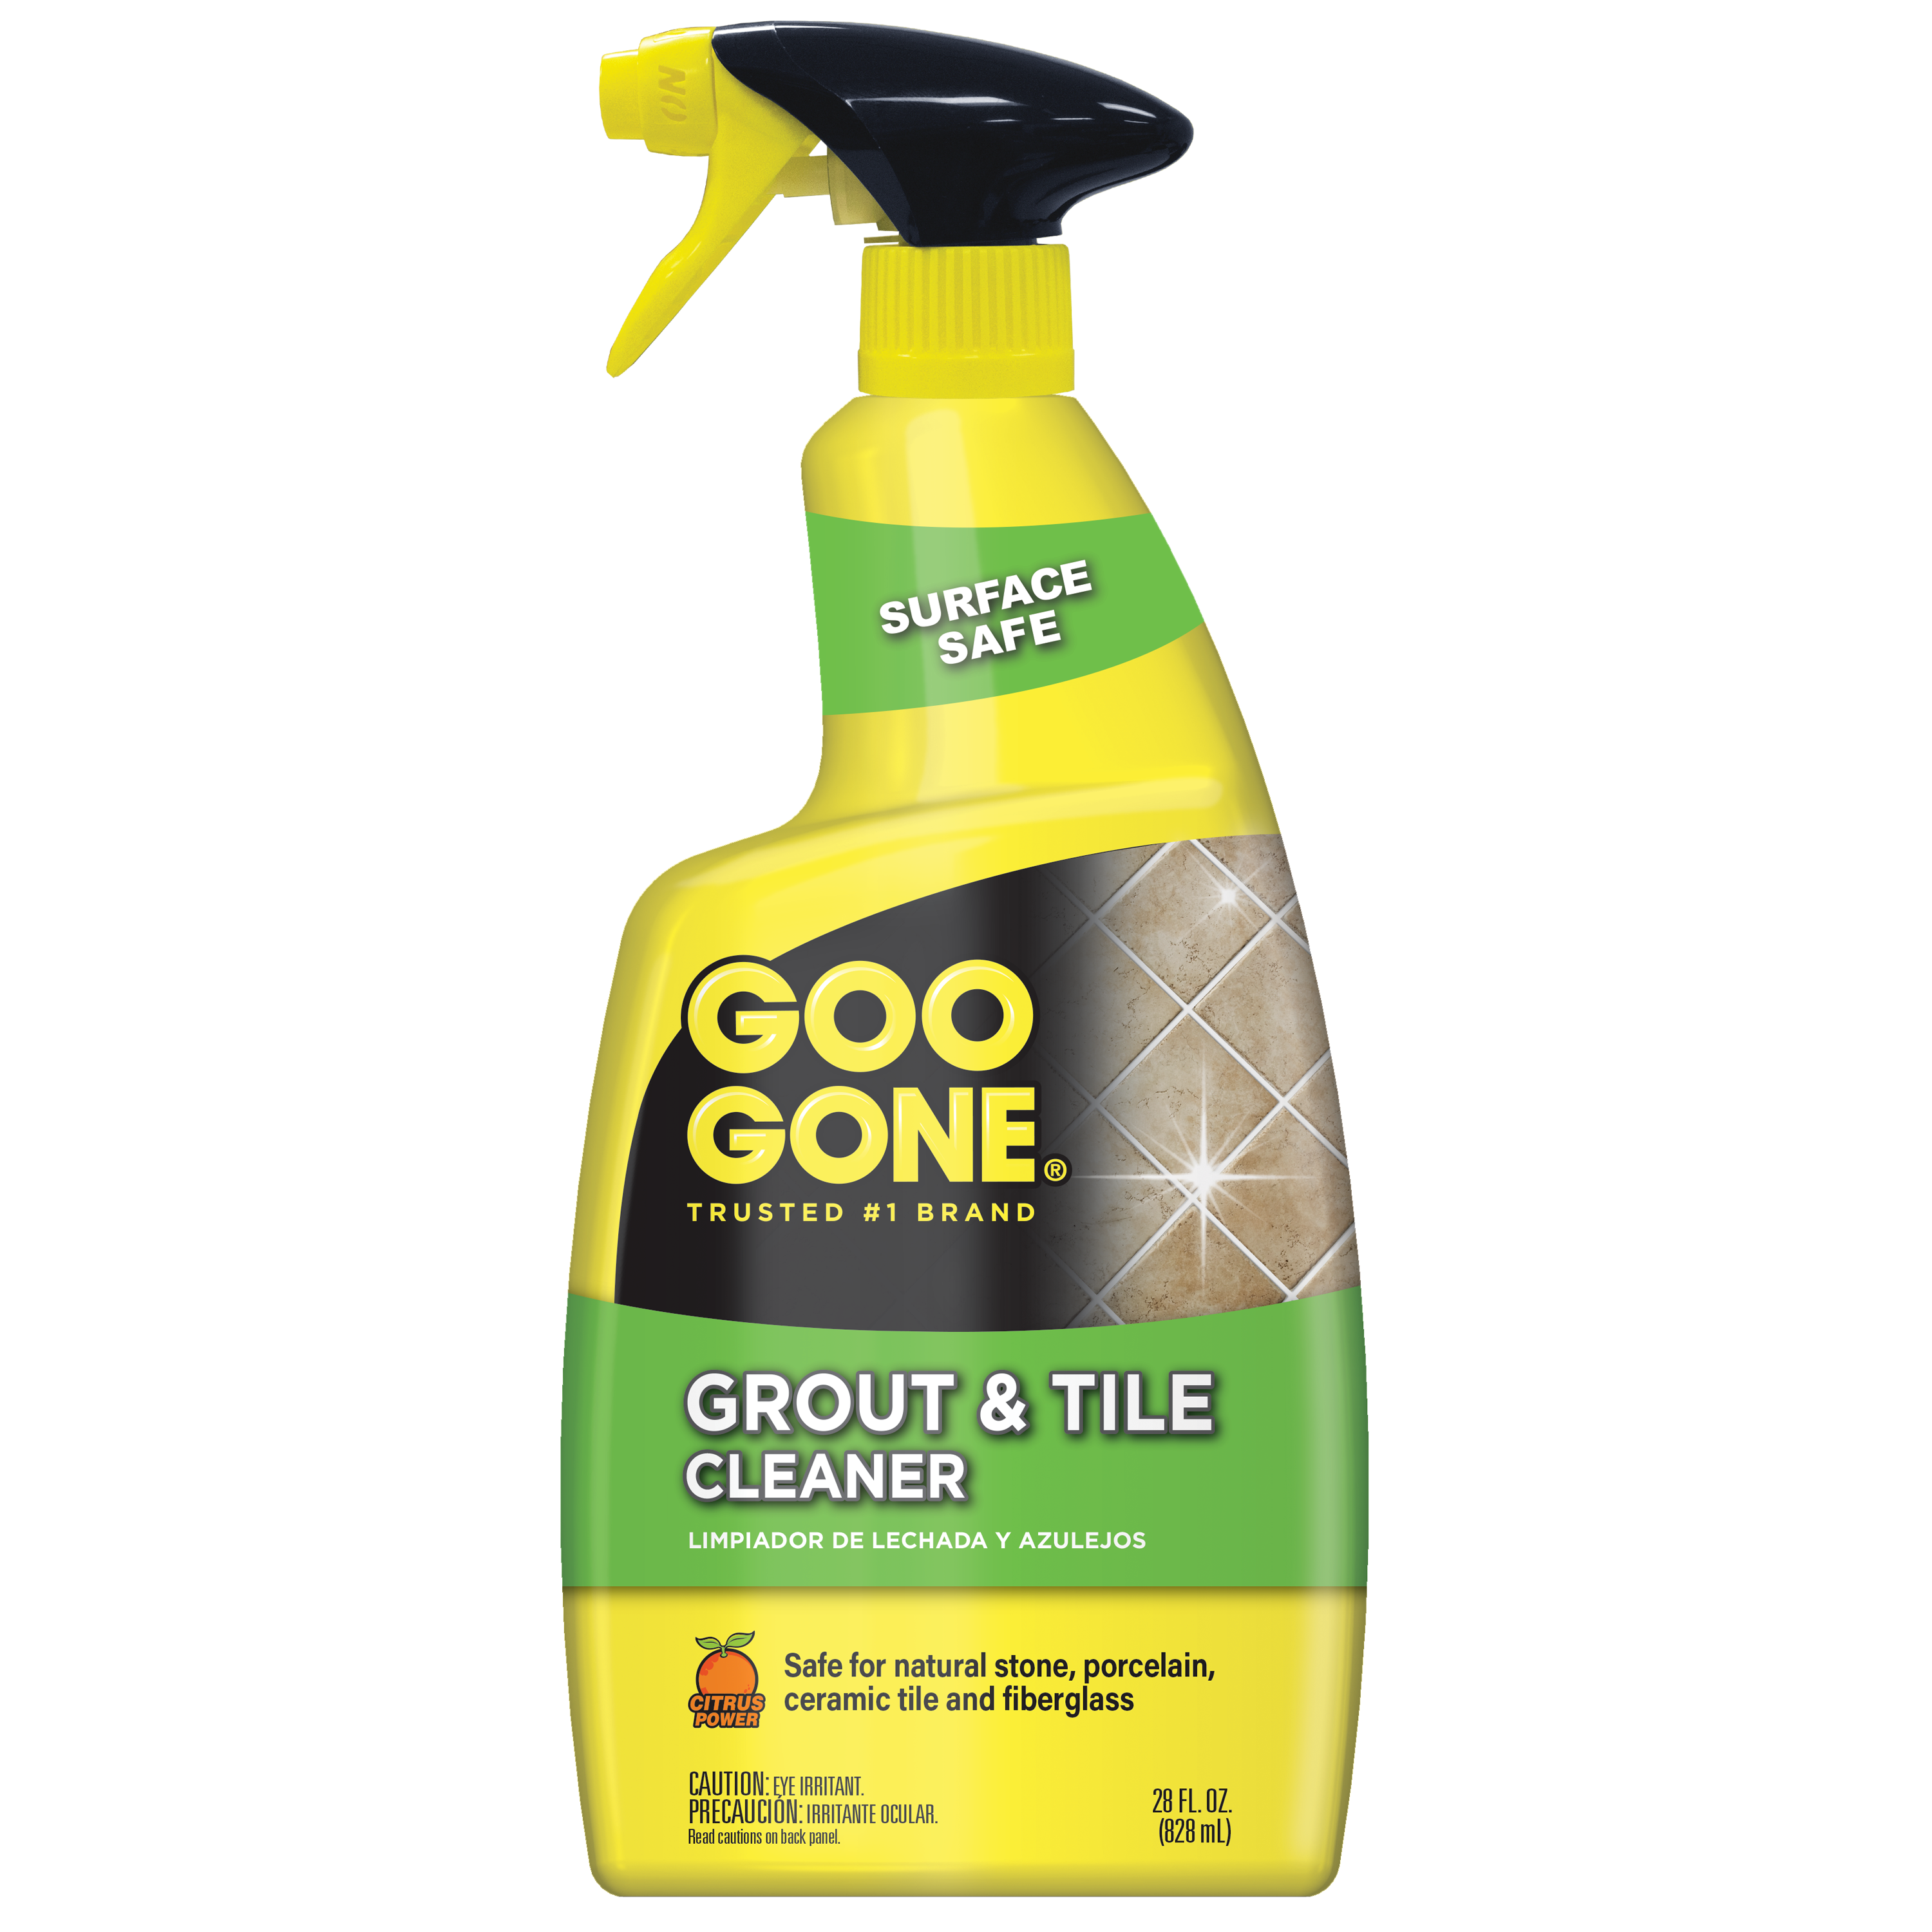 Goo Gone 24-fl oz Scented Liquid Adhesive Remover